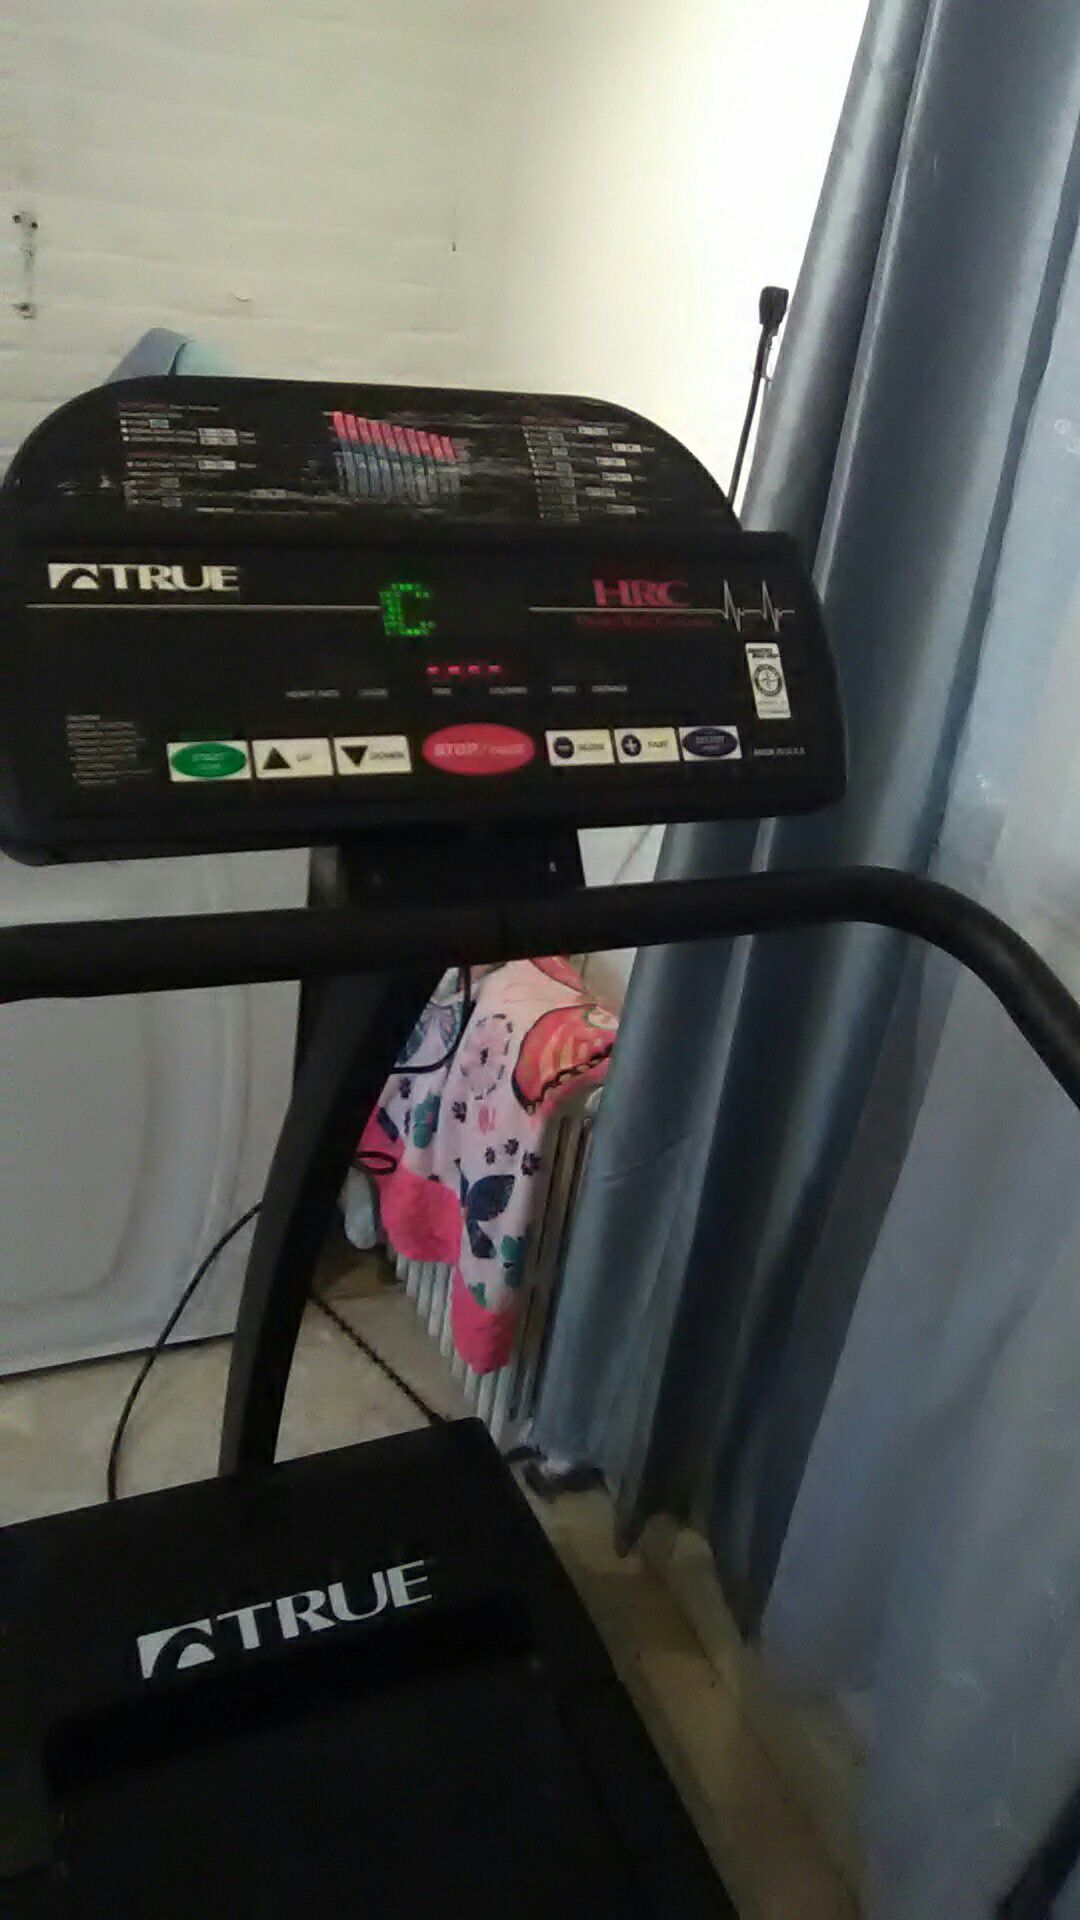 True treadmill machine for exercise